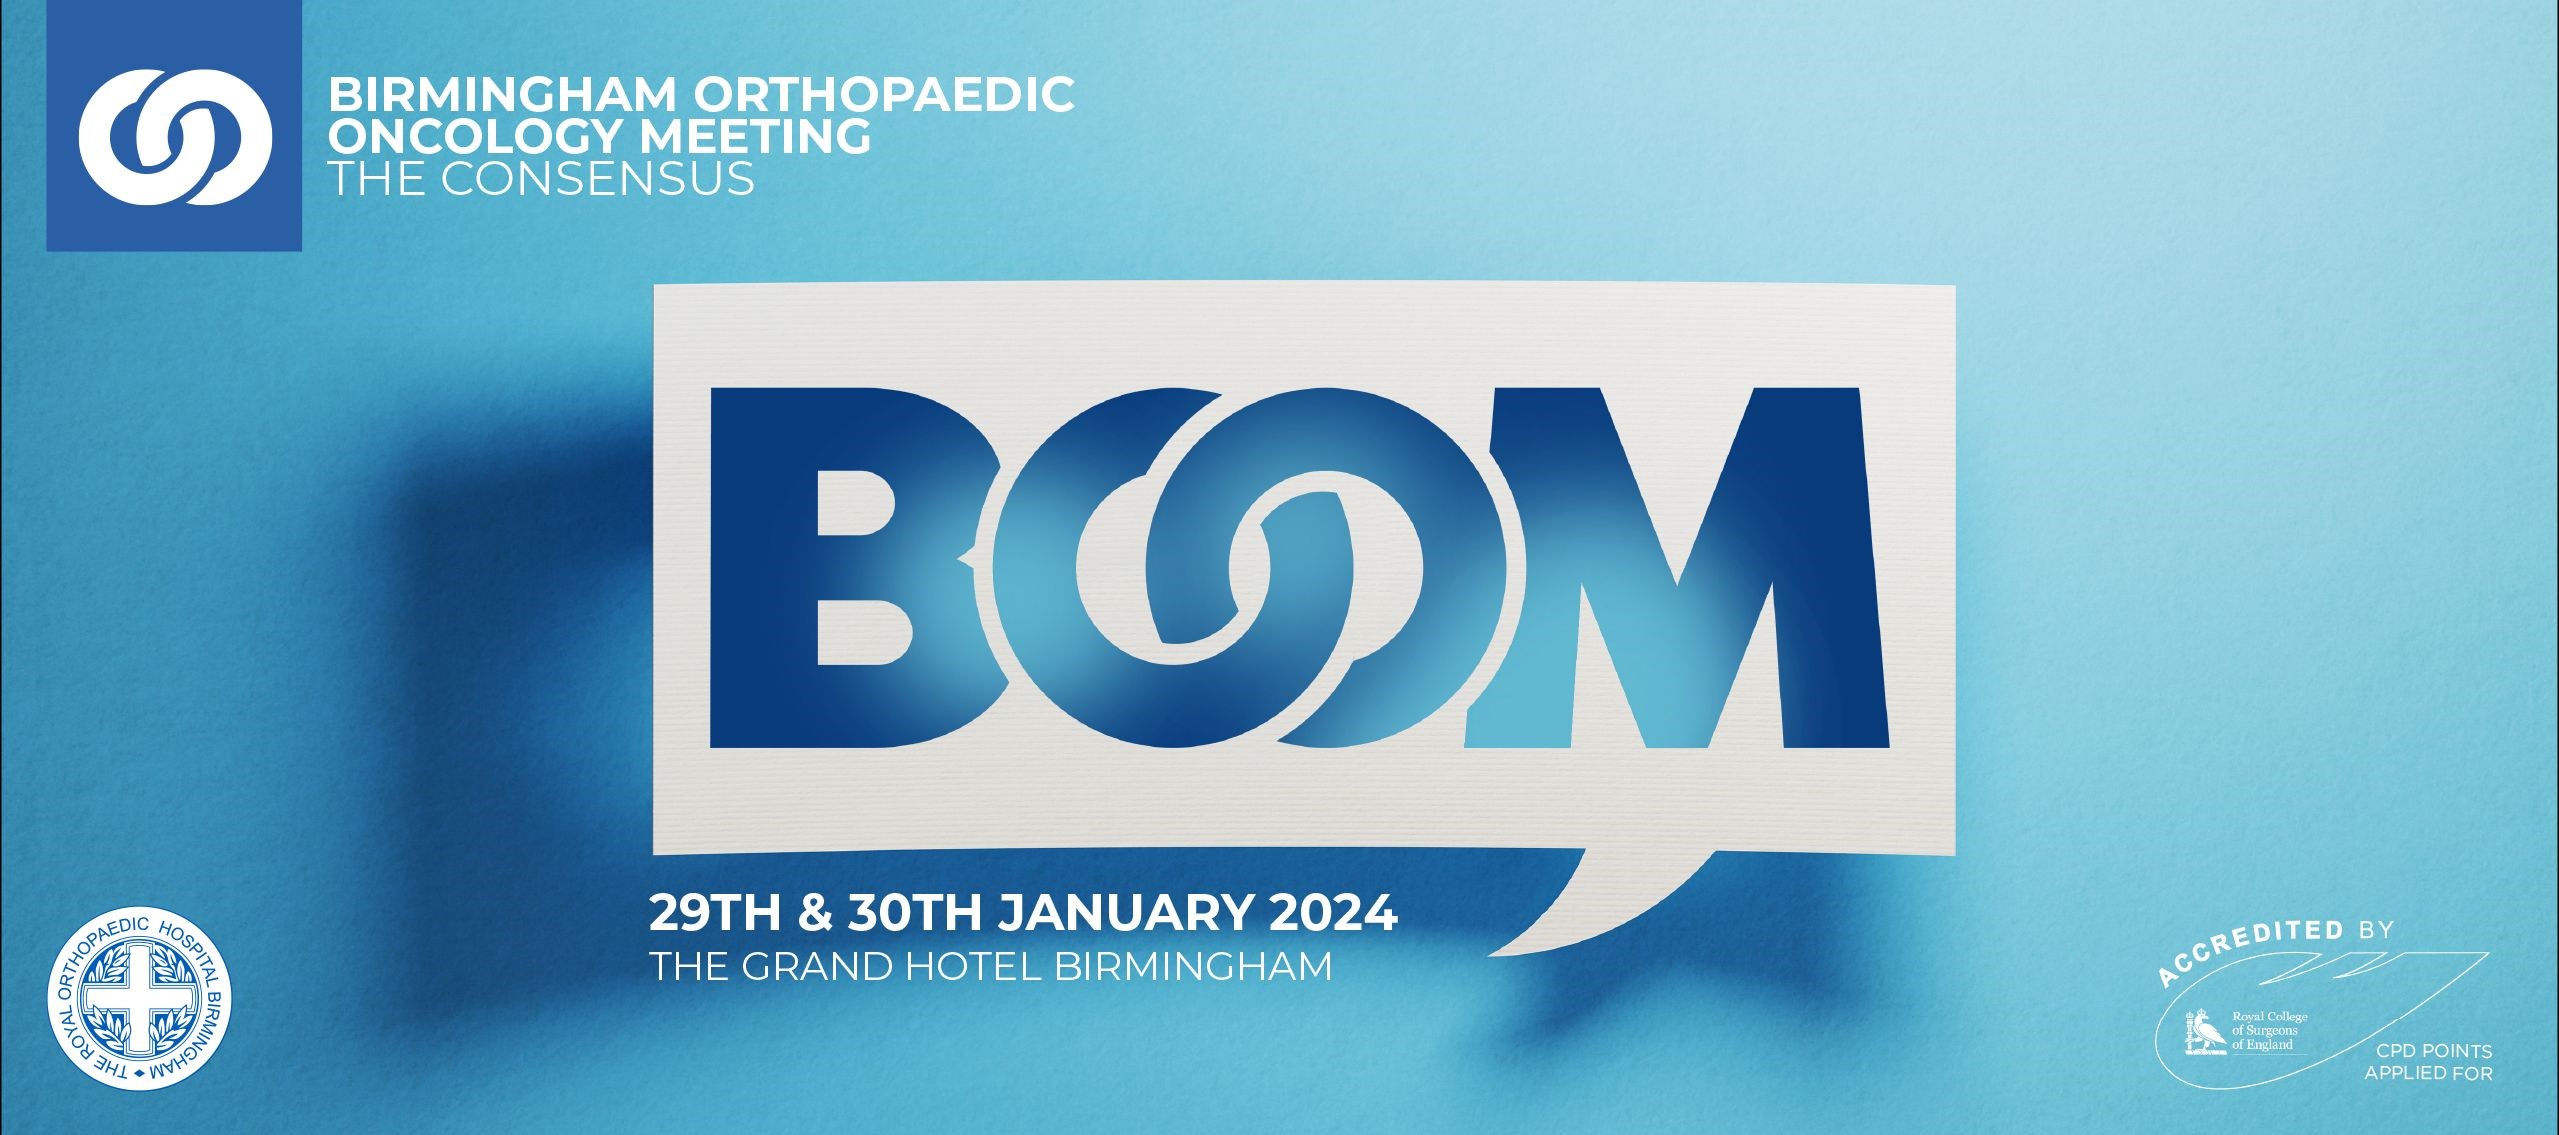 Birmingham Orthopaedic Oncology Consensus Meeting